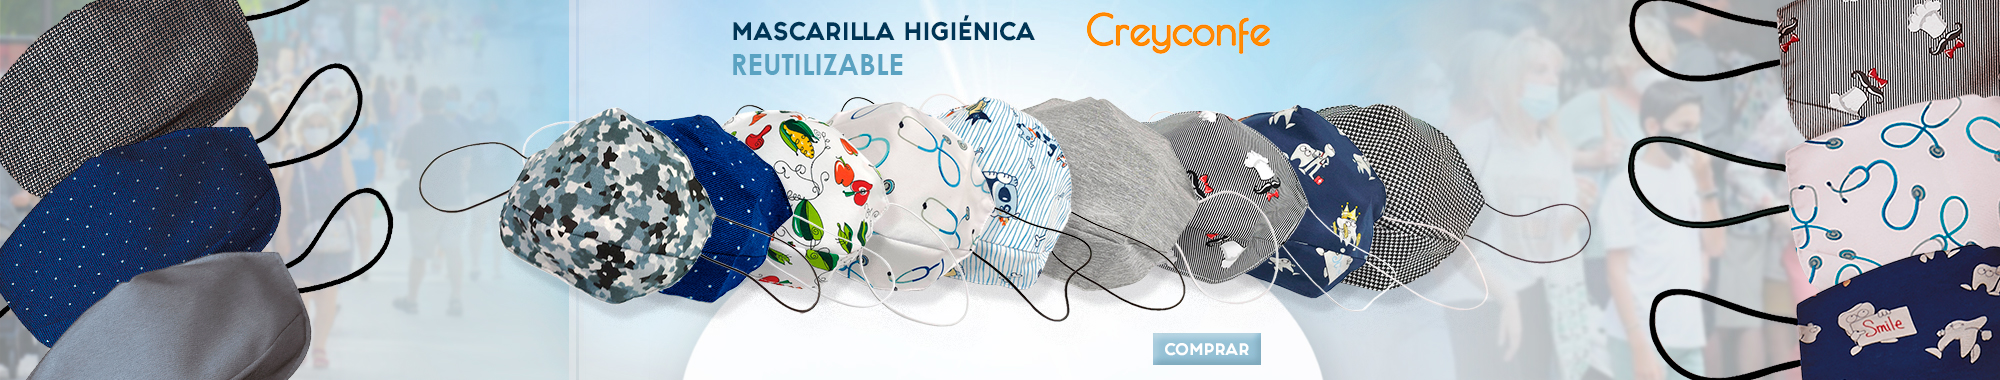 Mascarilla textil CREYCONFE